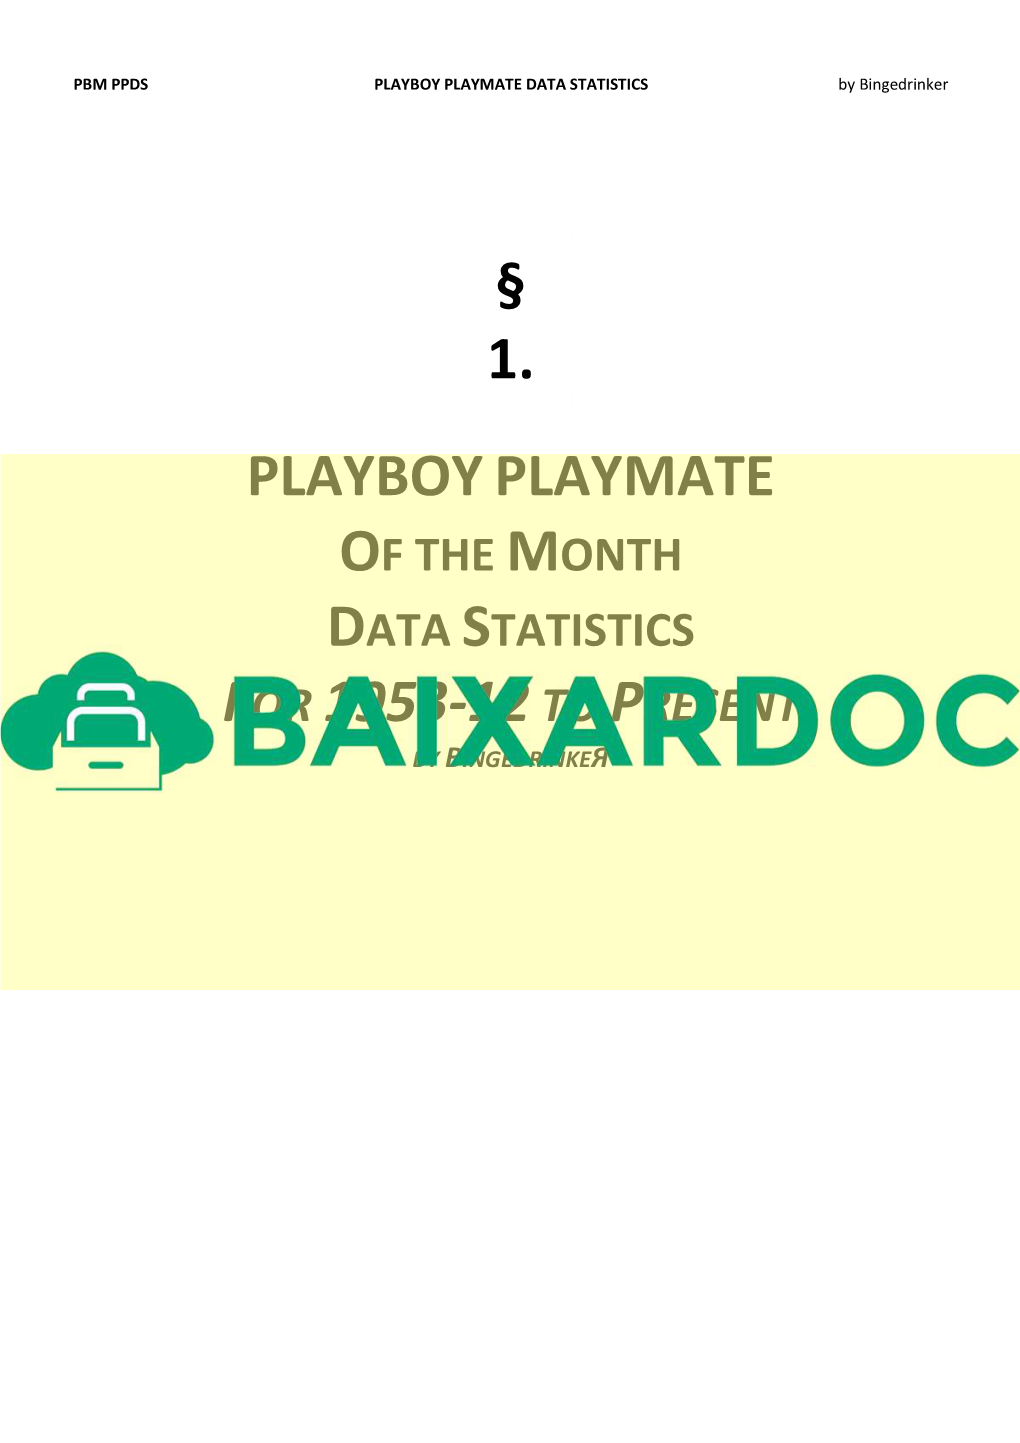 PLAYBOY PLAYMATE DATA STATISTICS by Bingedrinker